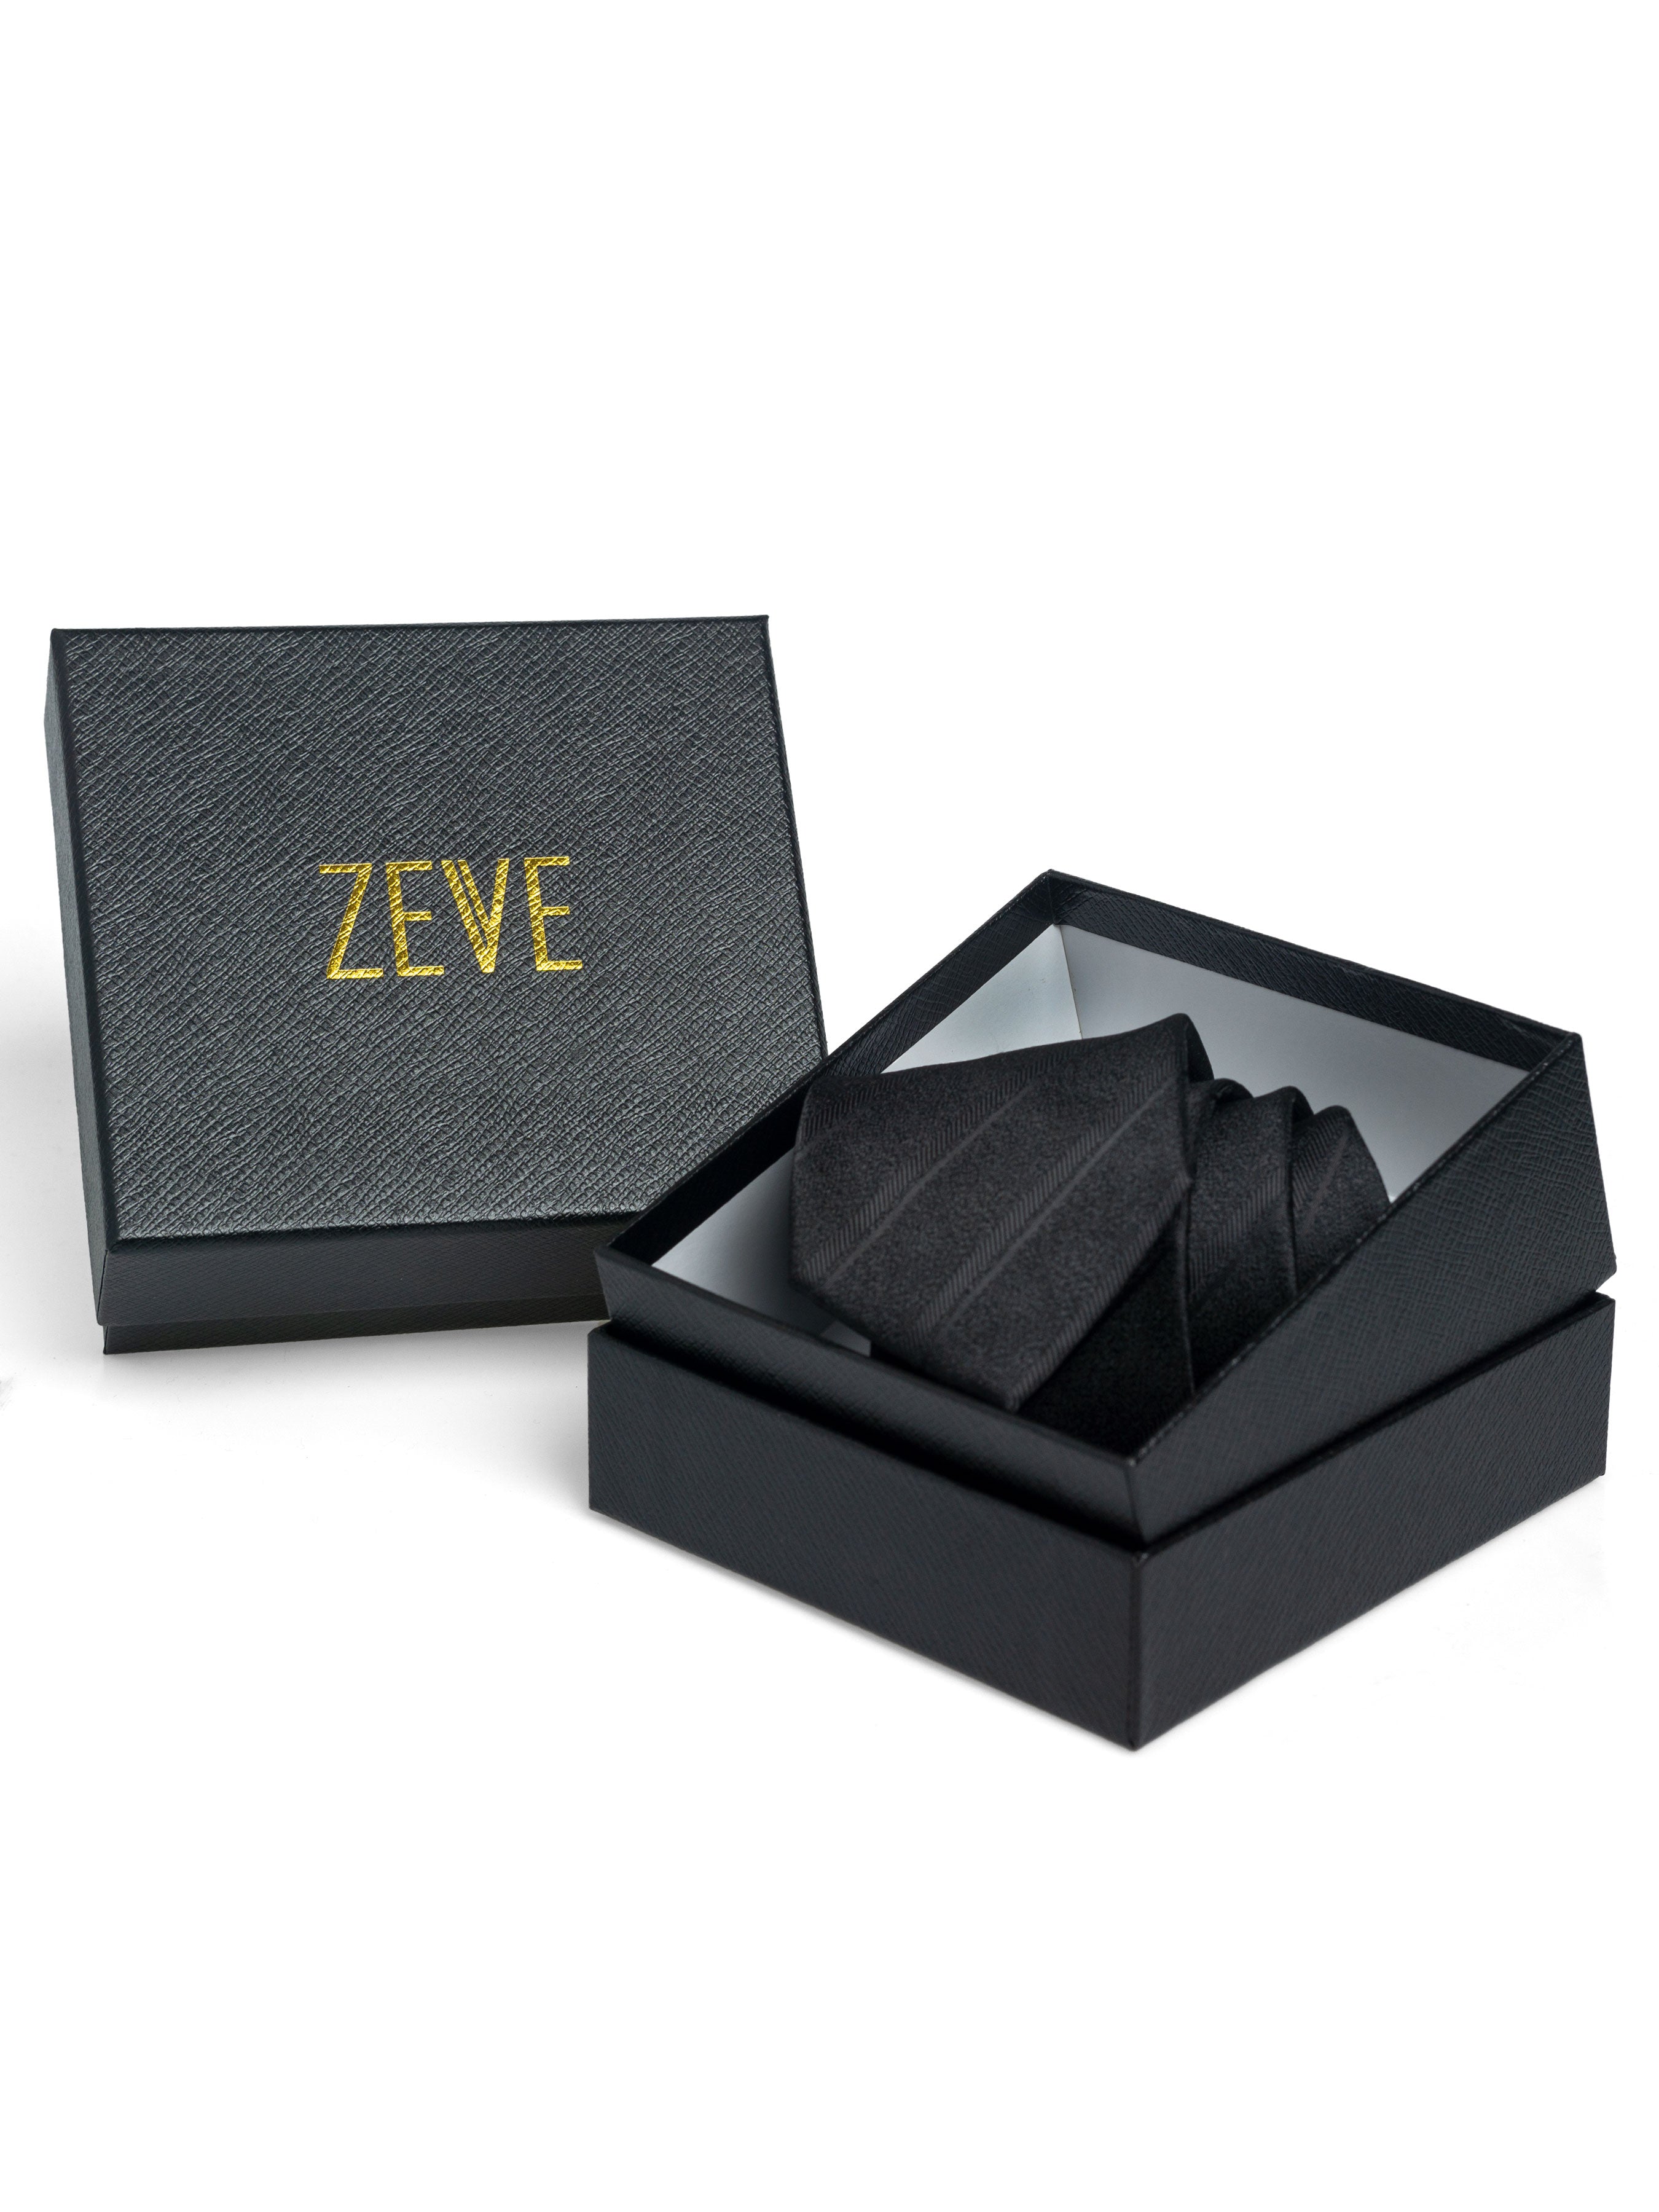 Micro Medallion Tie - Ochre Yellow - Zeve Shoes